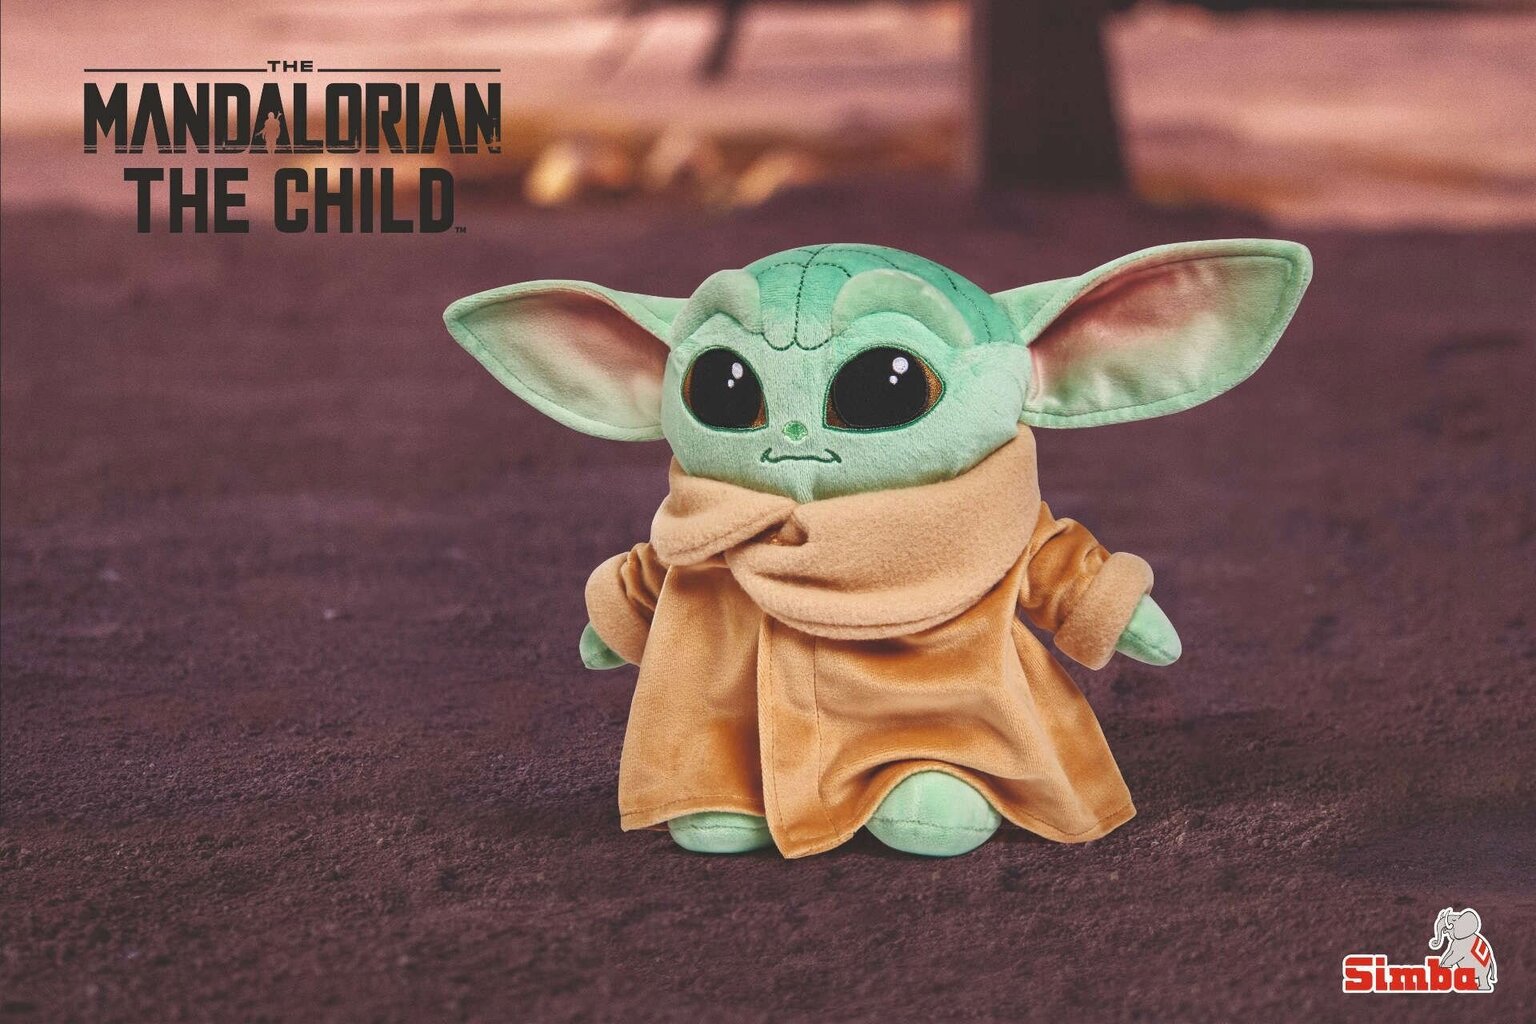 Pehme mänguasi Baby Yoda Star Wars, 25cm hind ja info | Pehmed mänguasjad | kaup24.ee